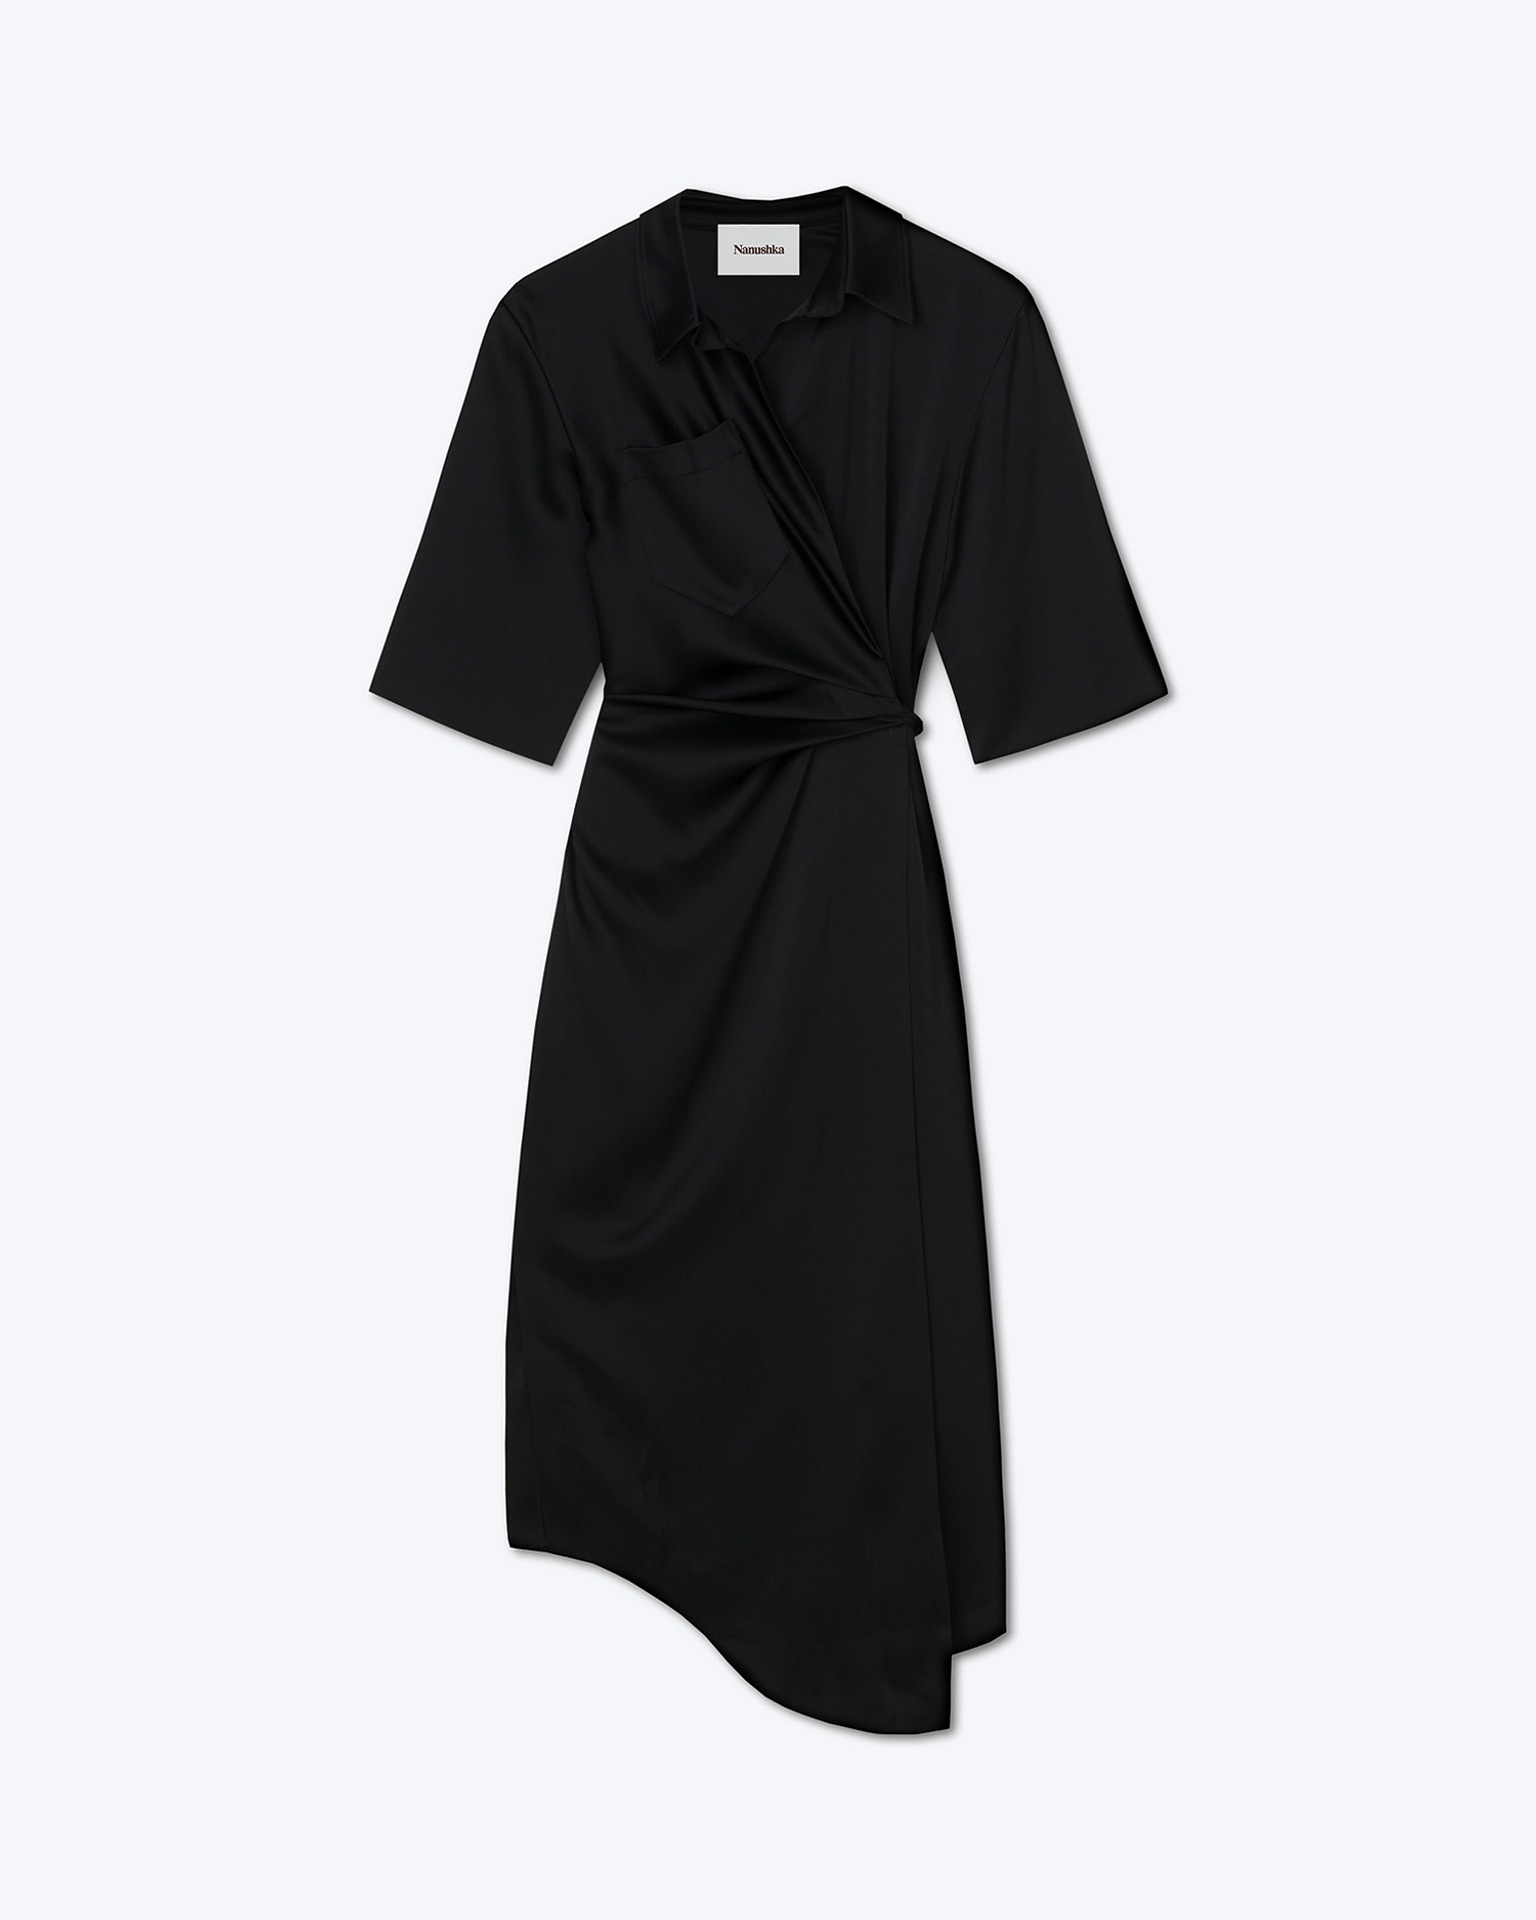 LAIS - Draped front shirt dress - Black - 1